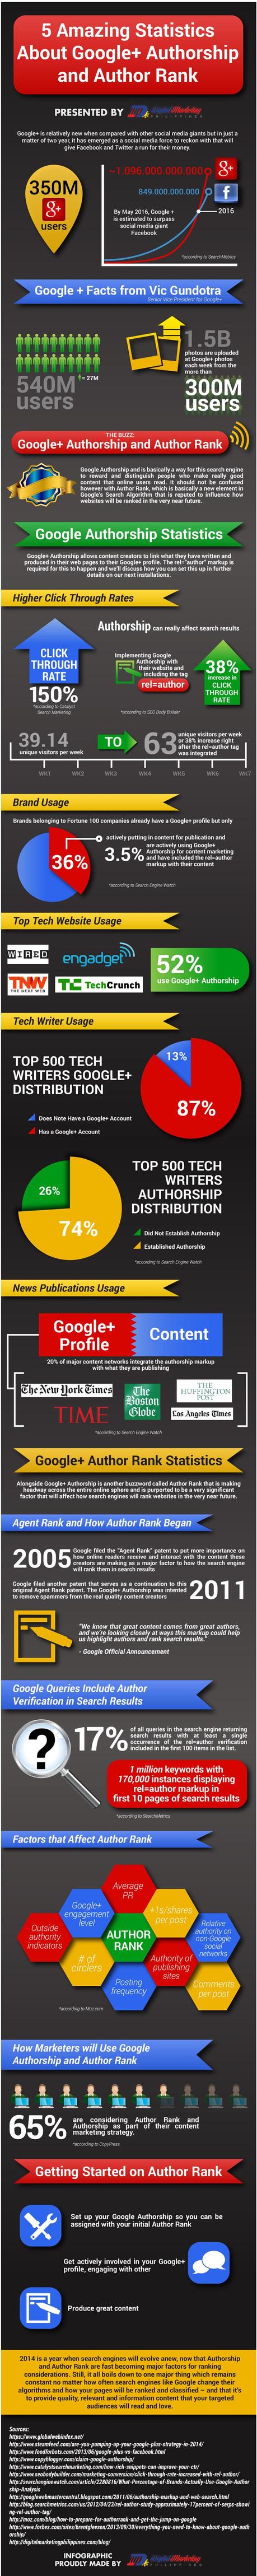 5 Amazing Statistics About Google Plus Authorship and Author Rank